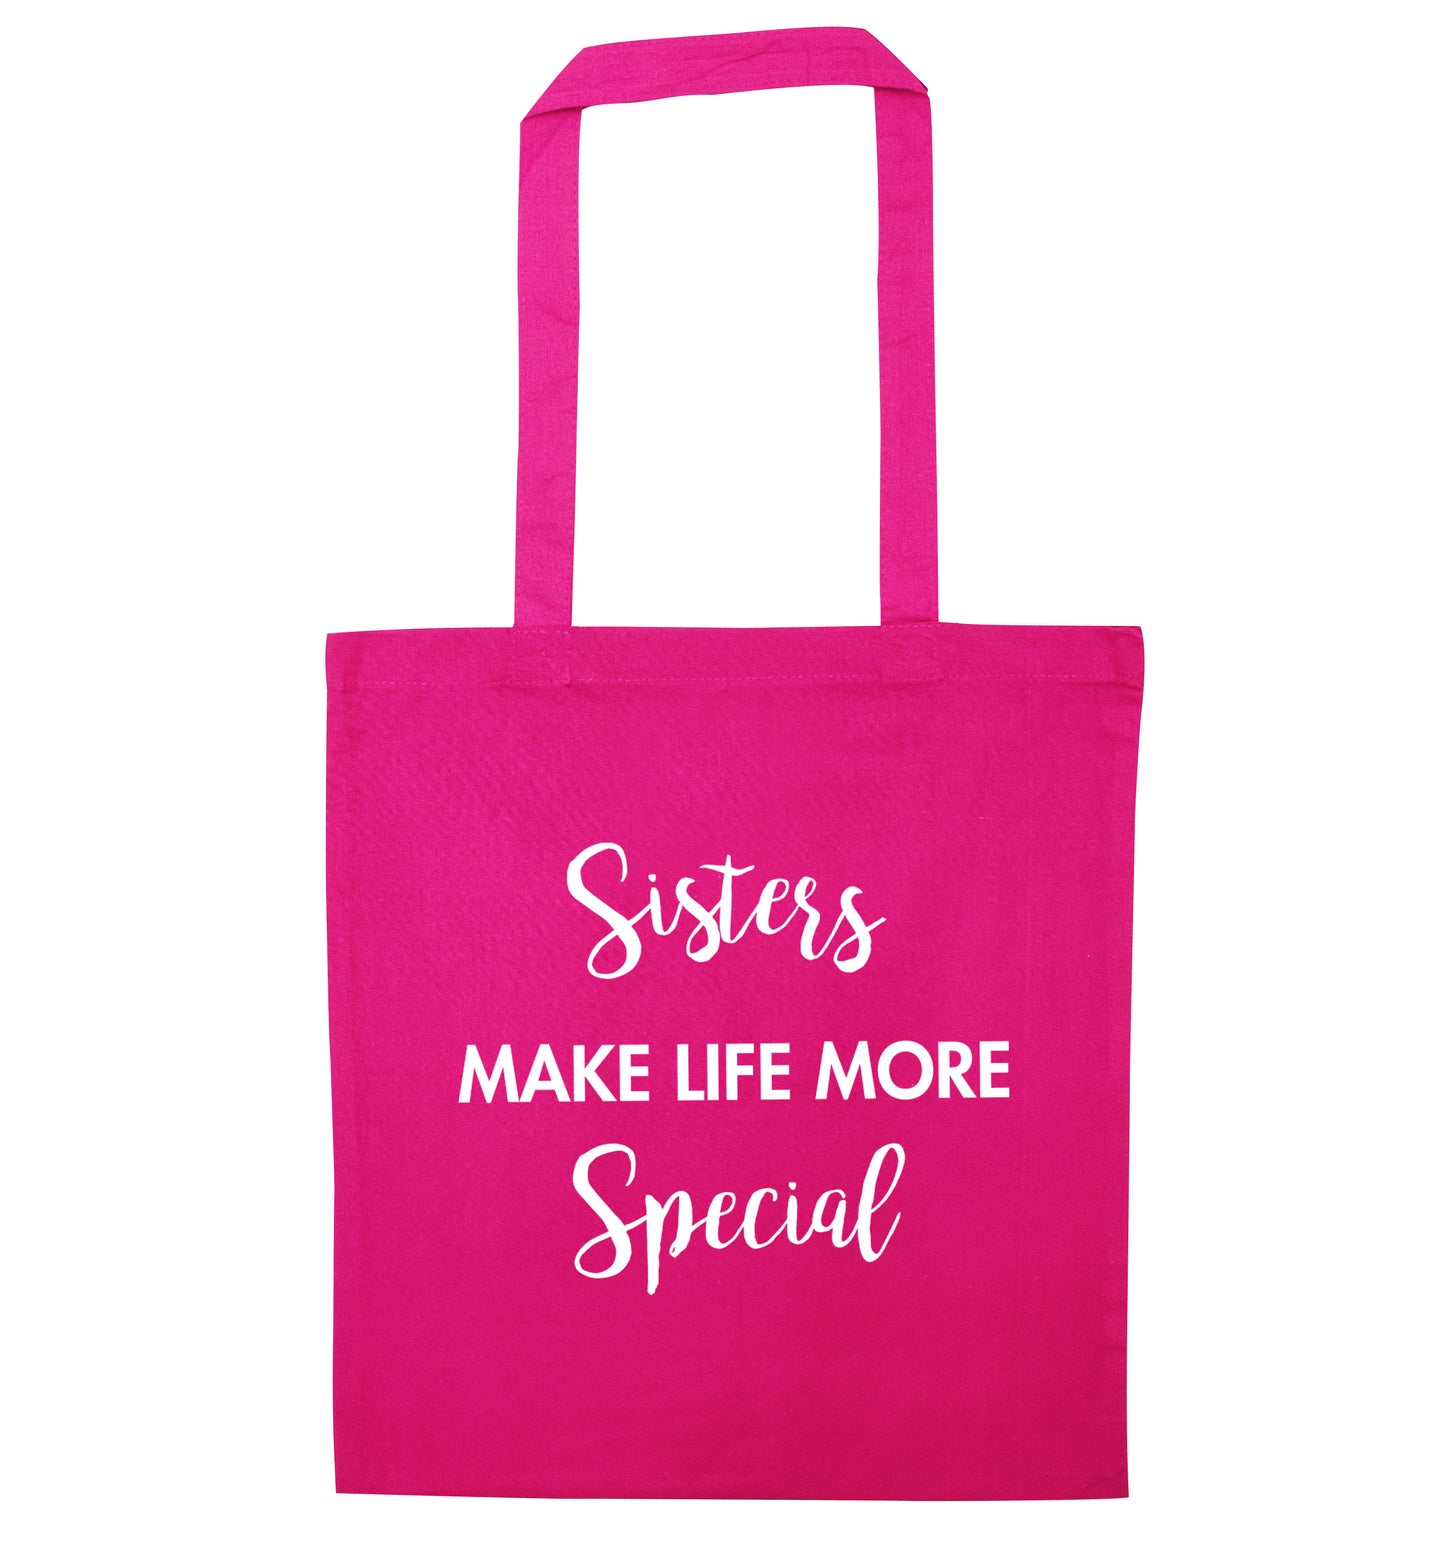 Sisters make life more special pink tote bag